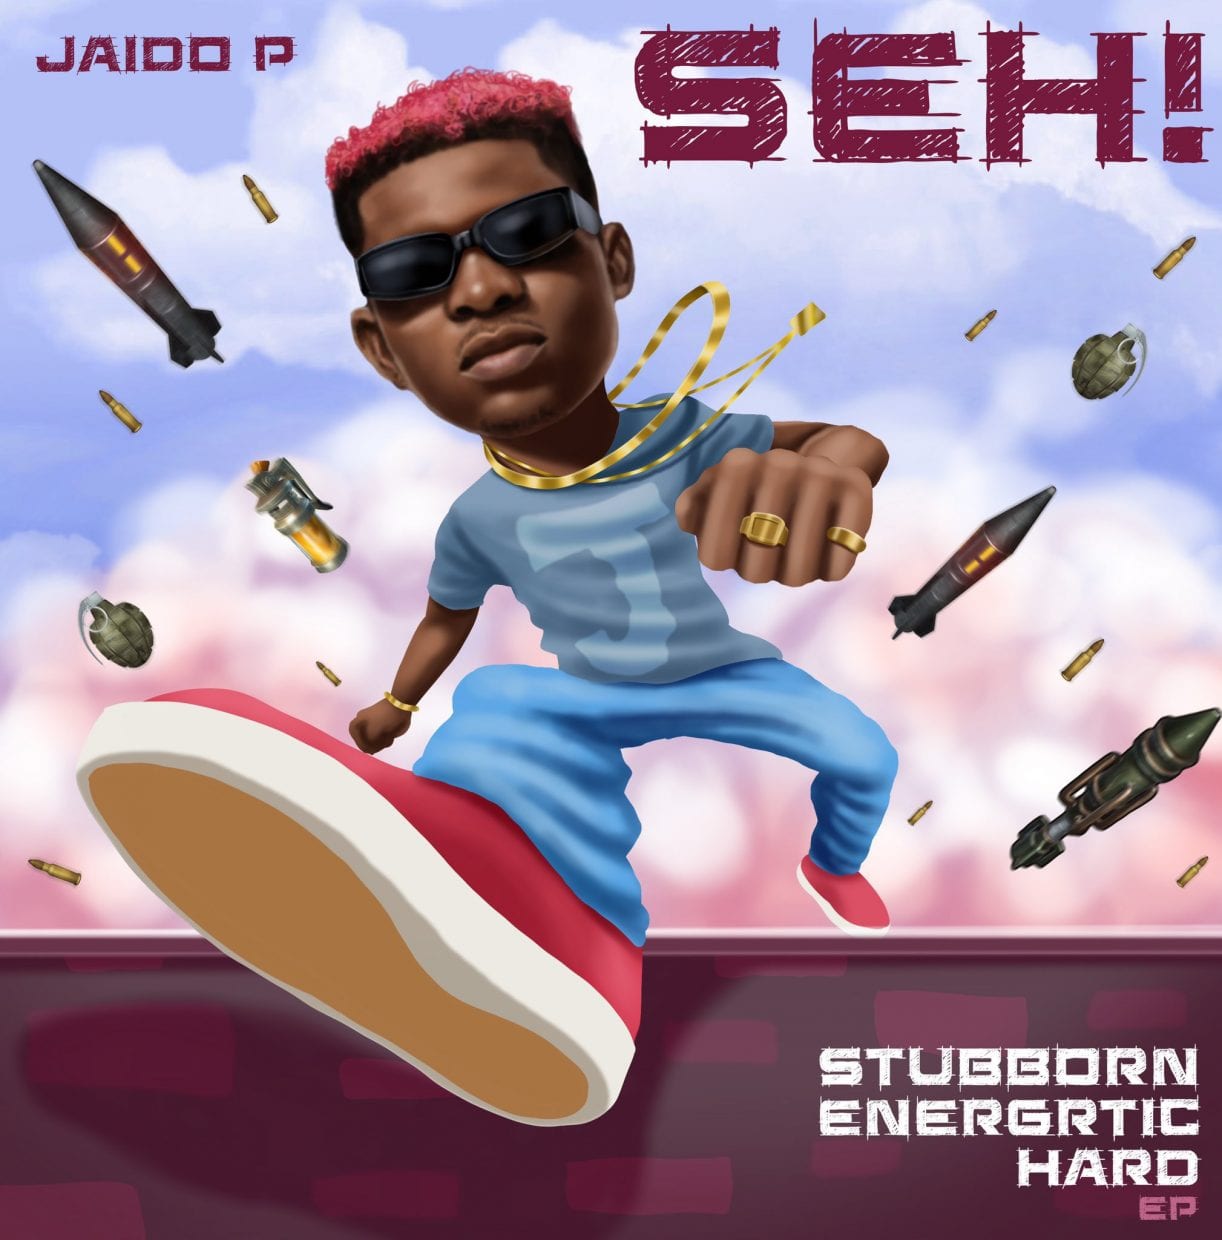 Jaido P - Stubborn Energetic Hard SEH! EP (Album) Mp3 Zip Fast Download